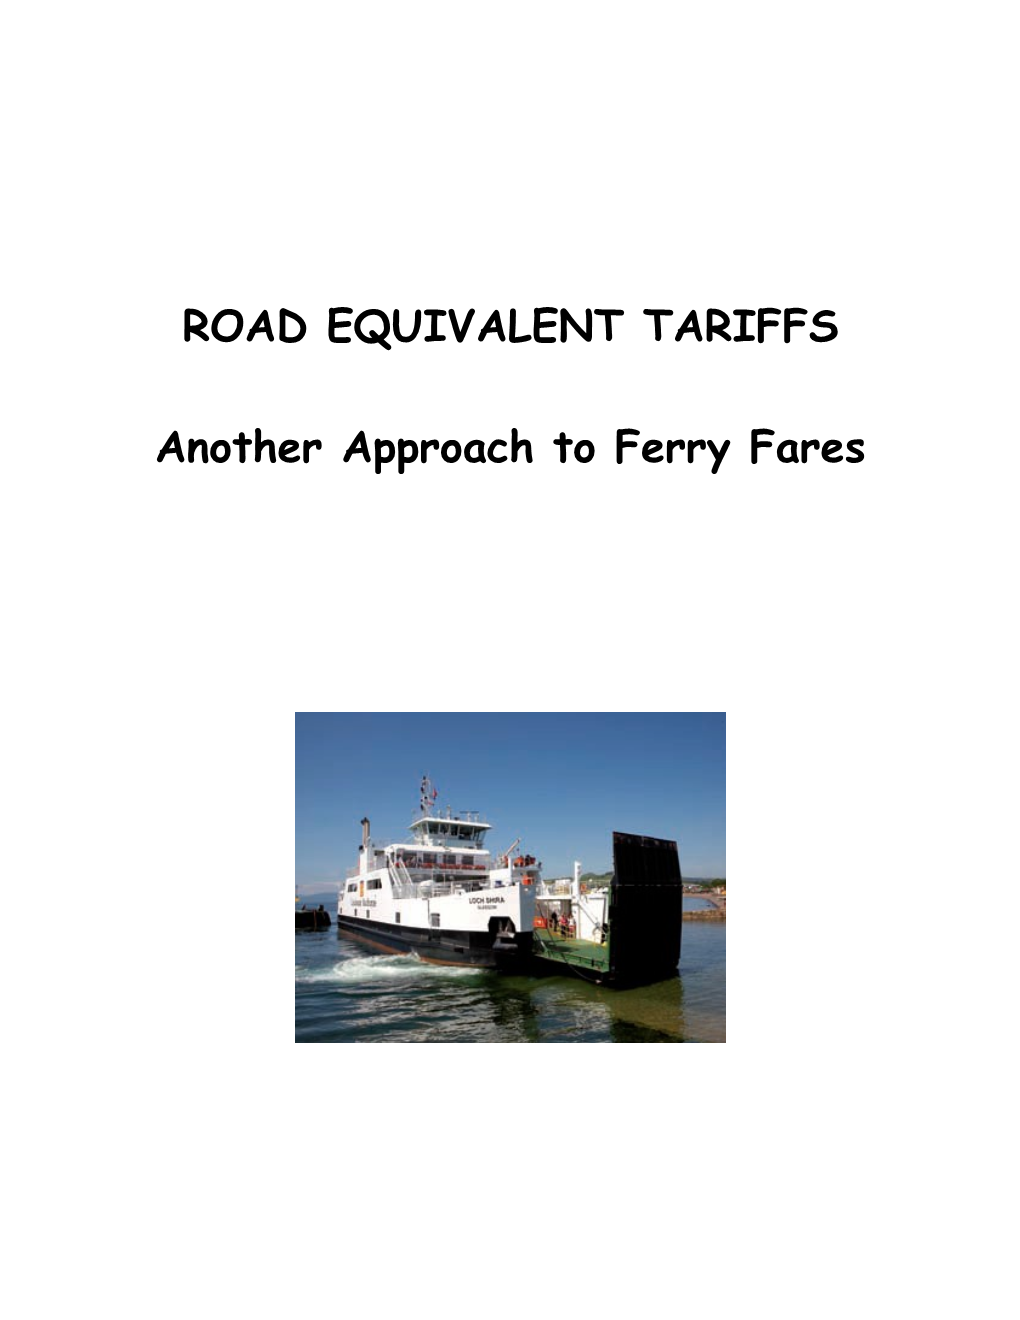 Fares, Fairness and Road Equivalent Tariffs